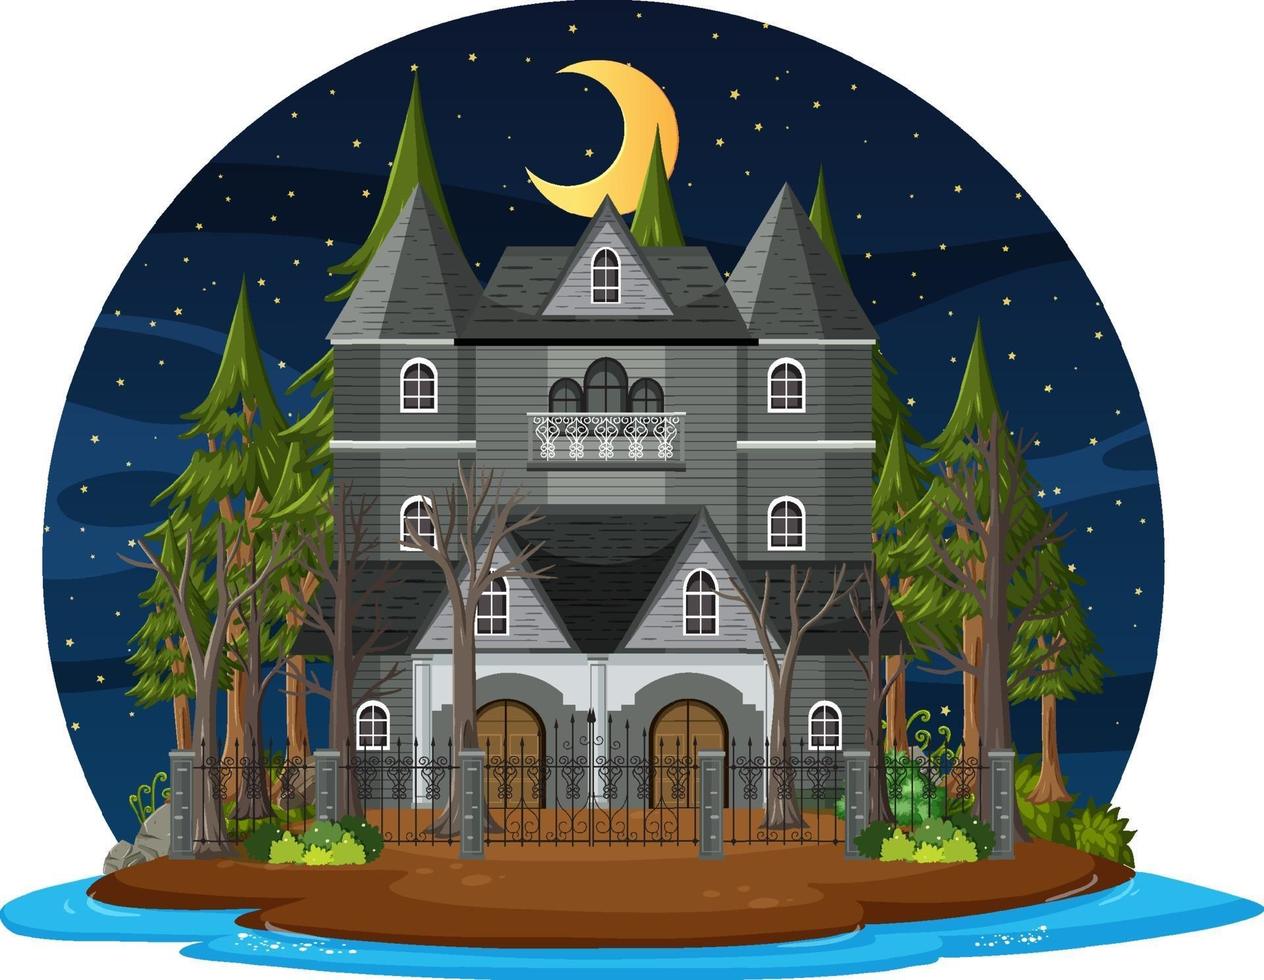 Haunted house at night scene vector